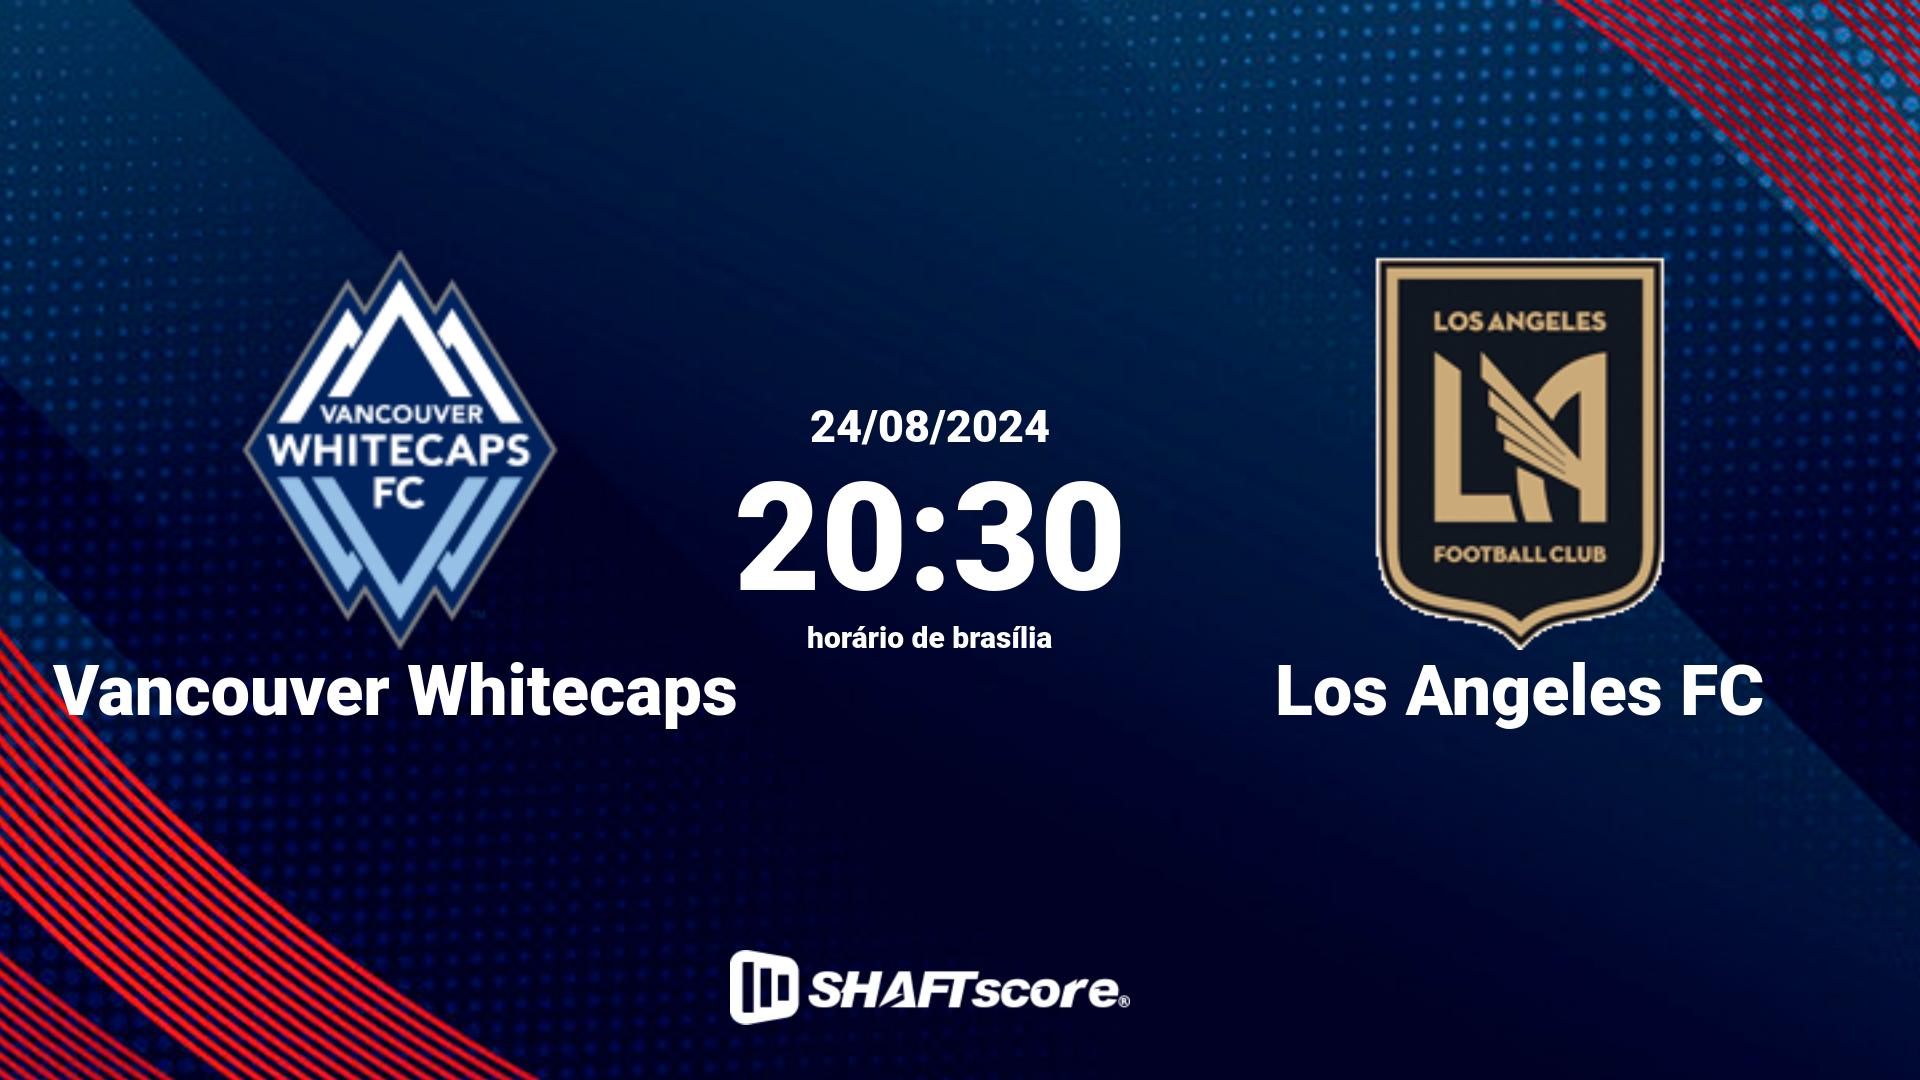 Estatísticas do jogo Vancouver Whitecaps vs Los Angeles FC 24.08 20:30